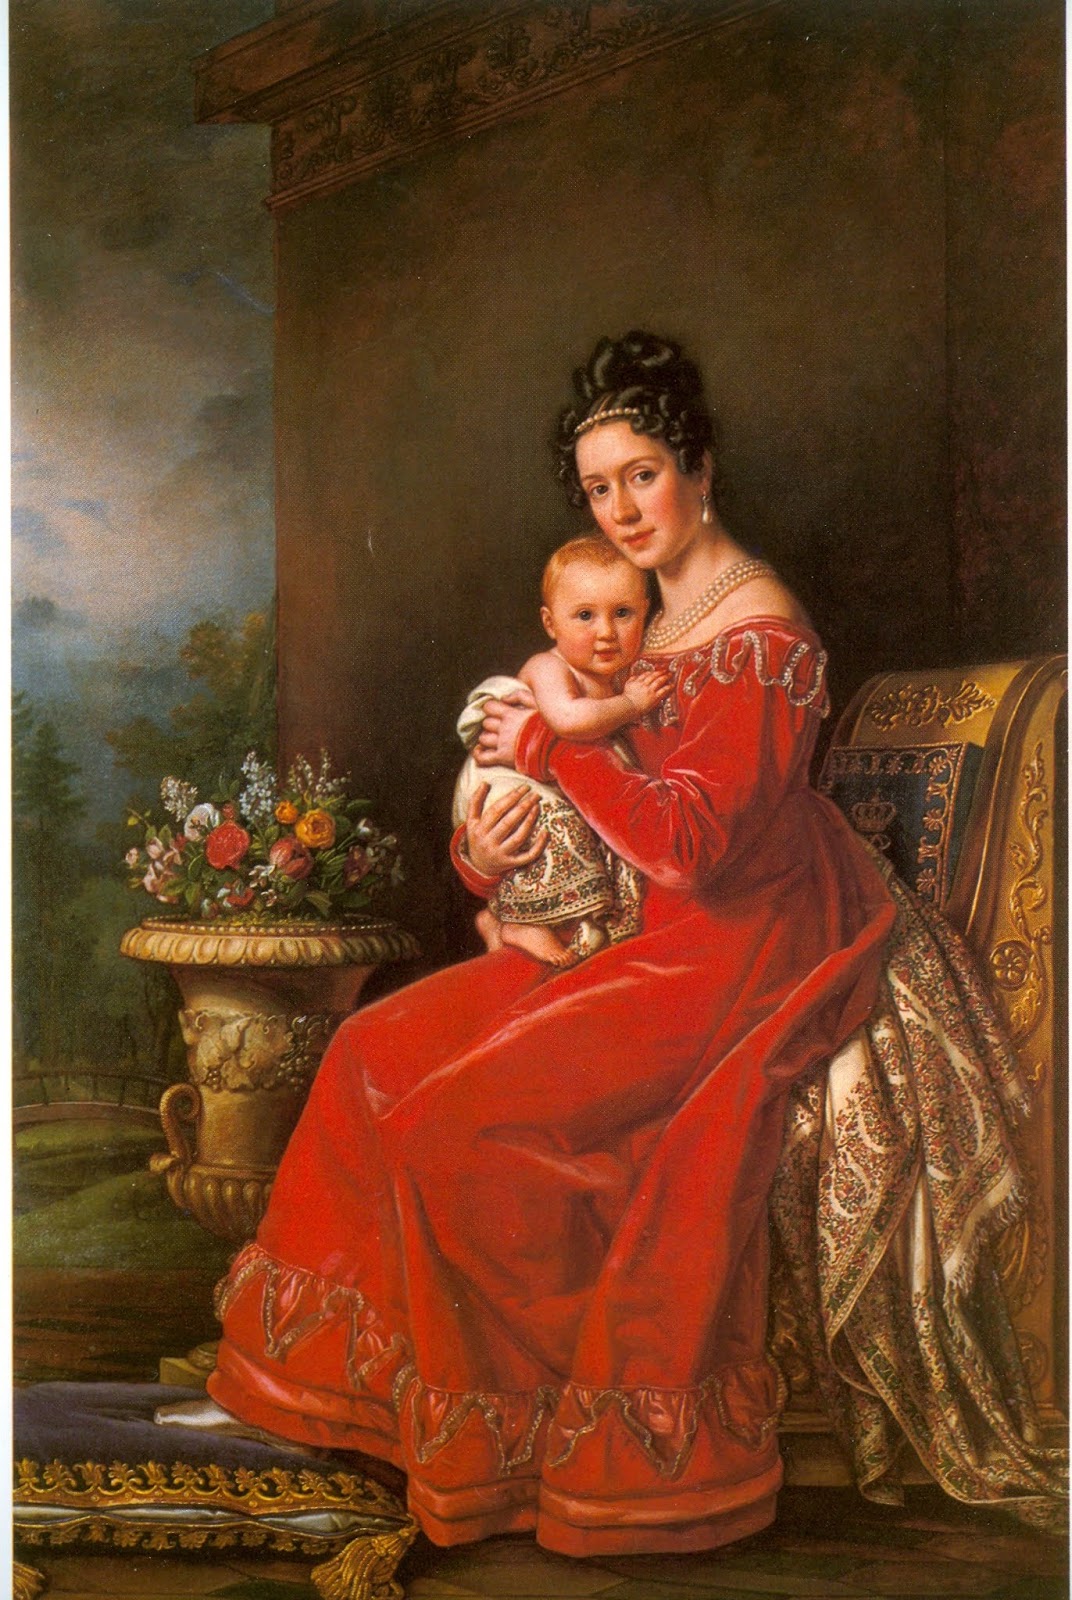 Paintings by Joseph Karl Stieler (1781-1858)